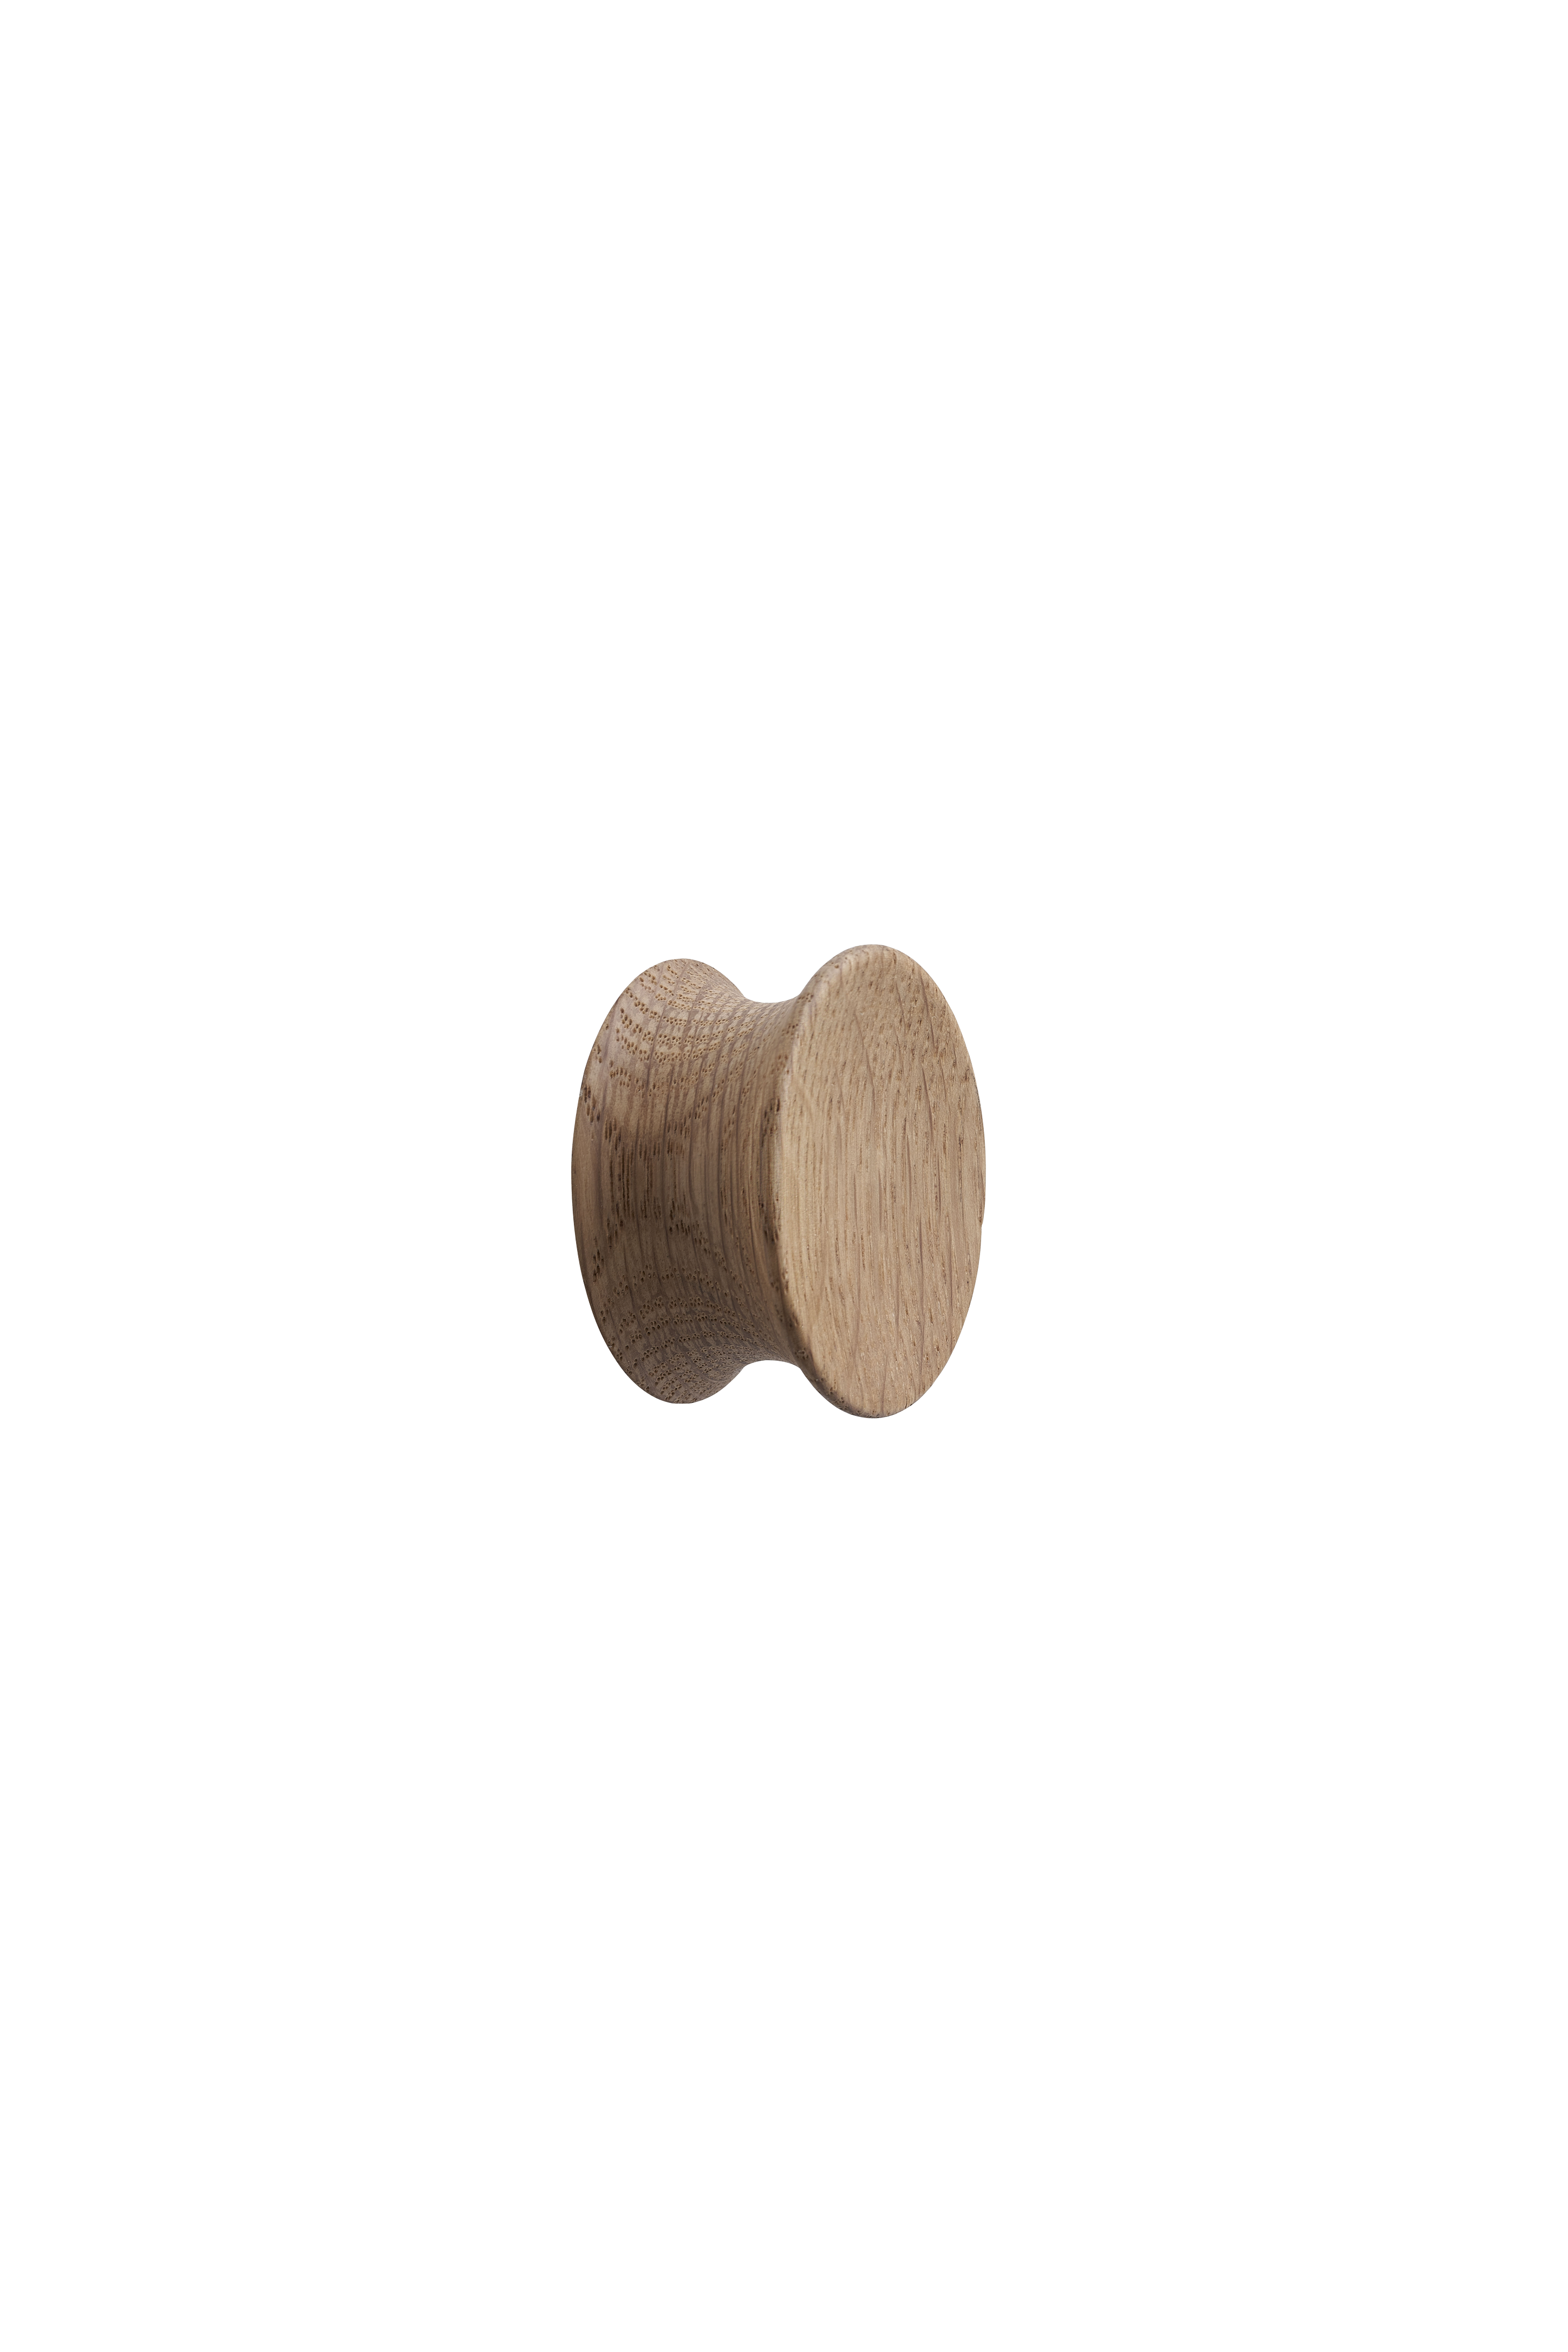 PULLEY knop, eg FSC 100%, træ • Furnipart